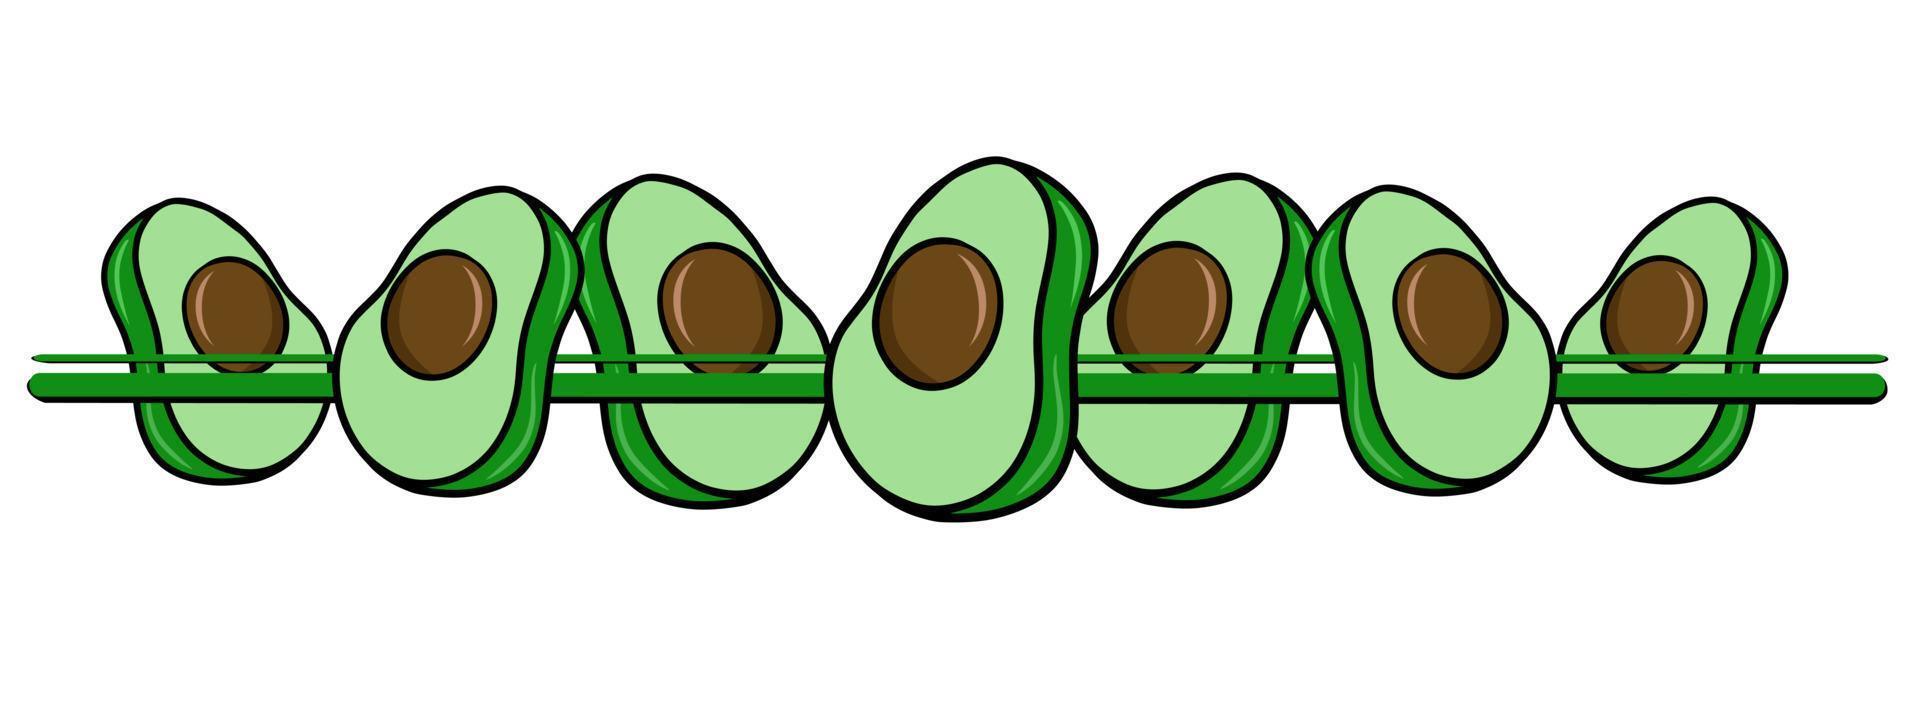 Horizontal border, edge, green halves of avocado fruits , vector illustration in cartoon style on a white background